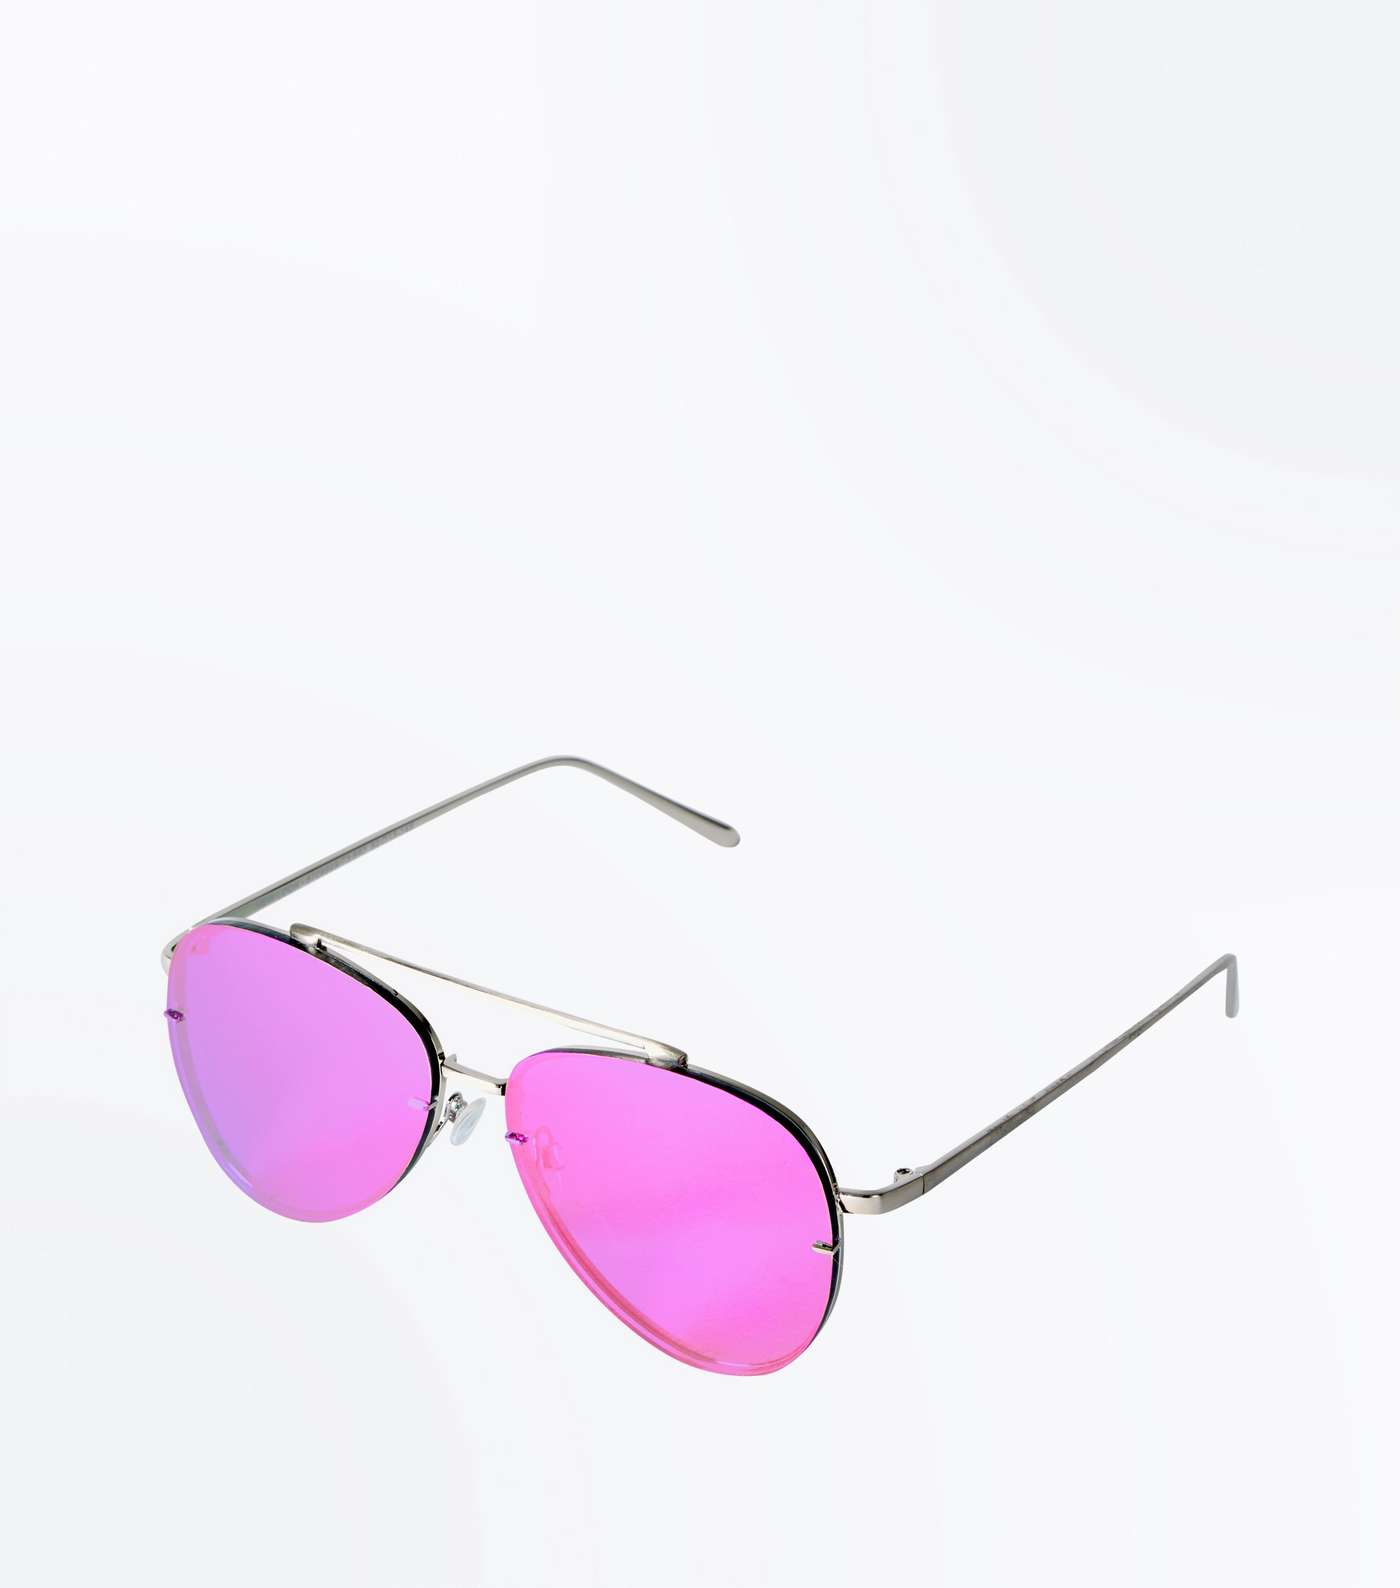 Mid Pink Tinted Aviator Style Sunglasses